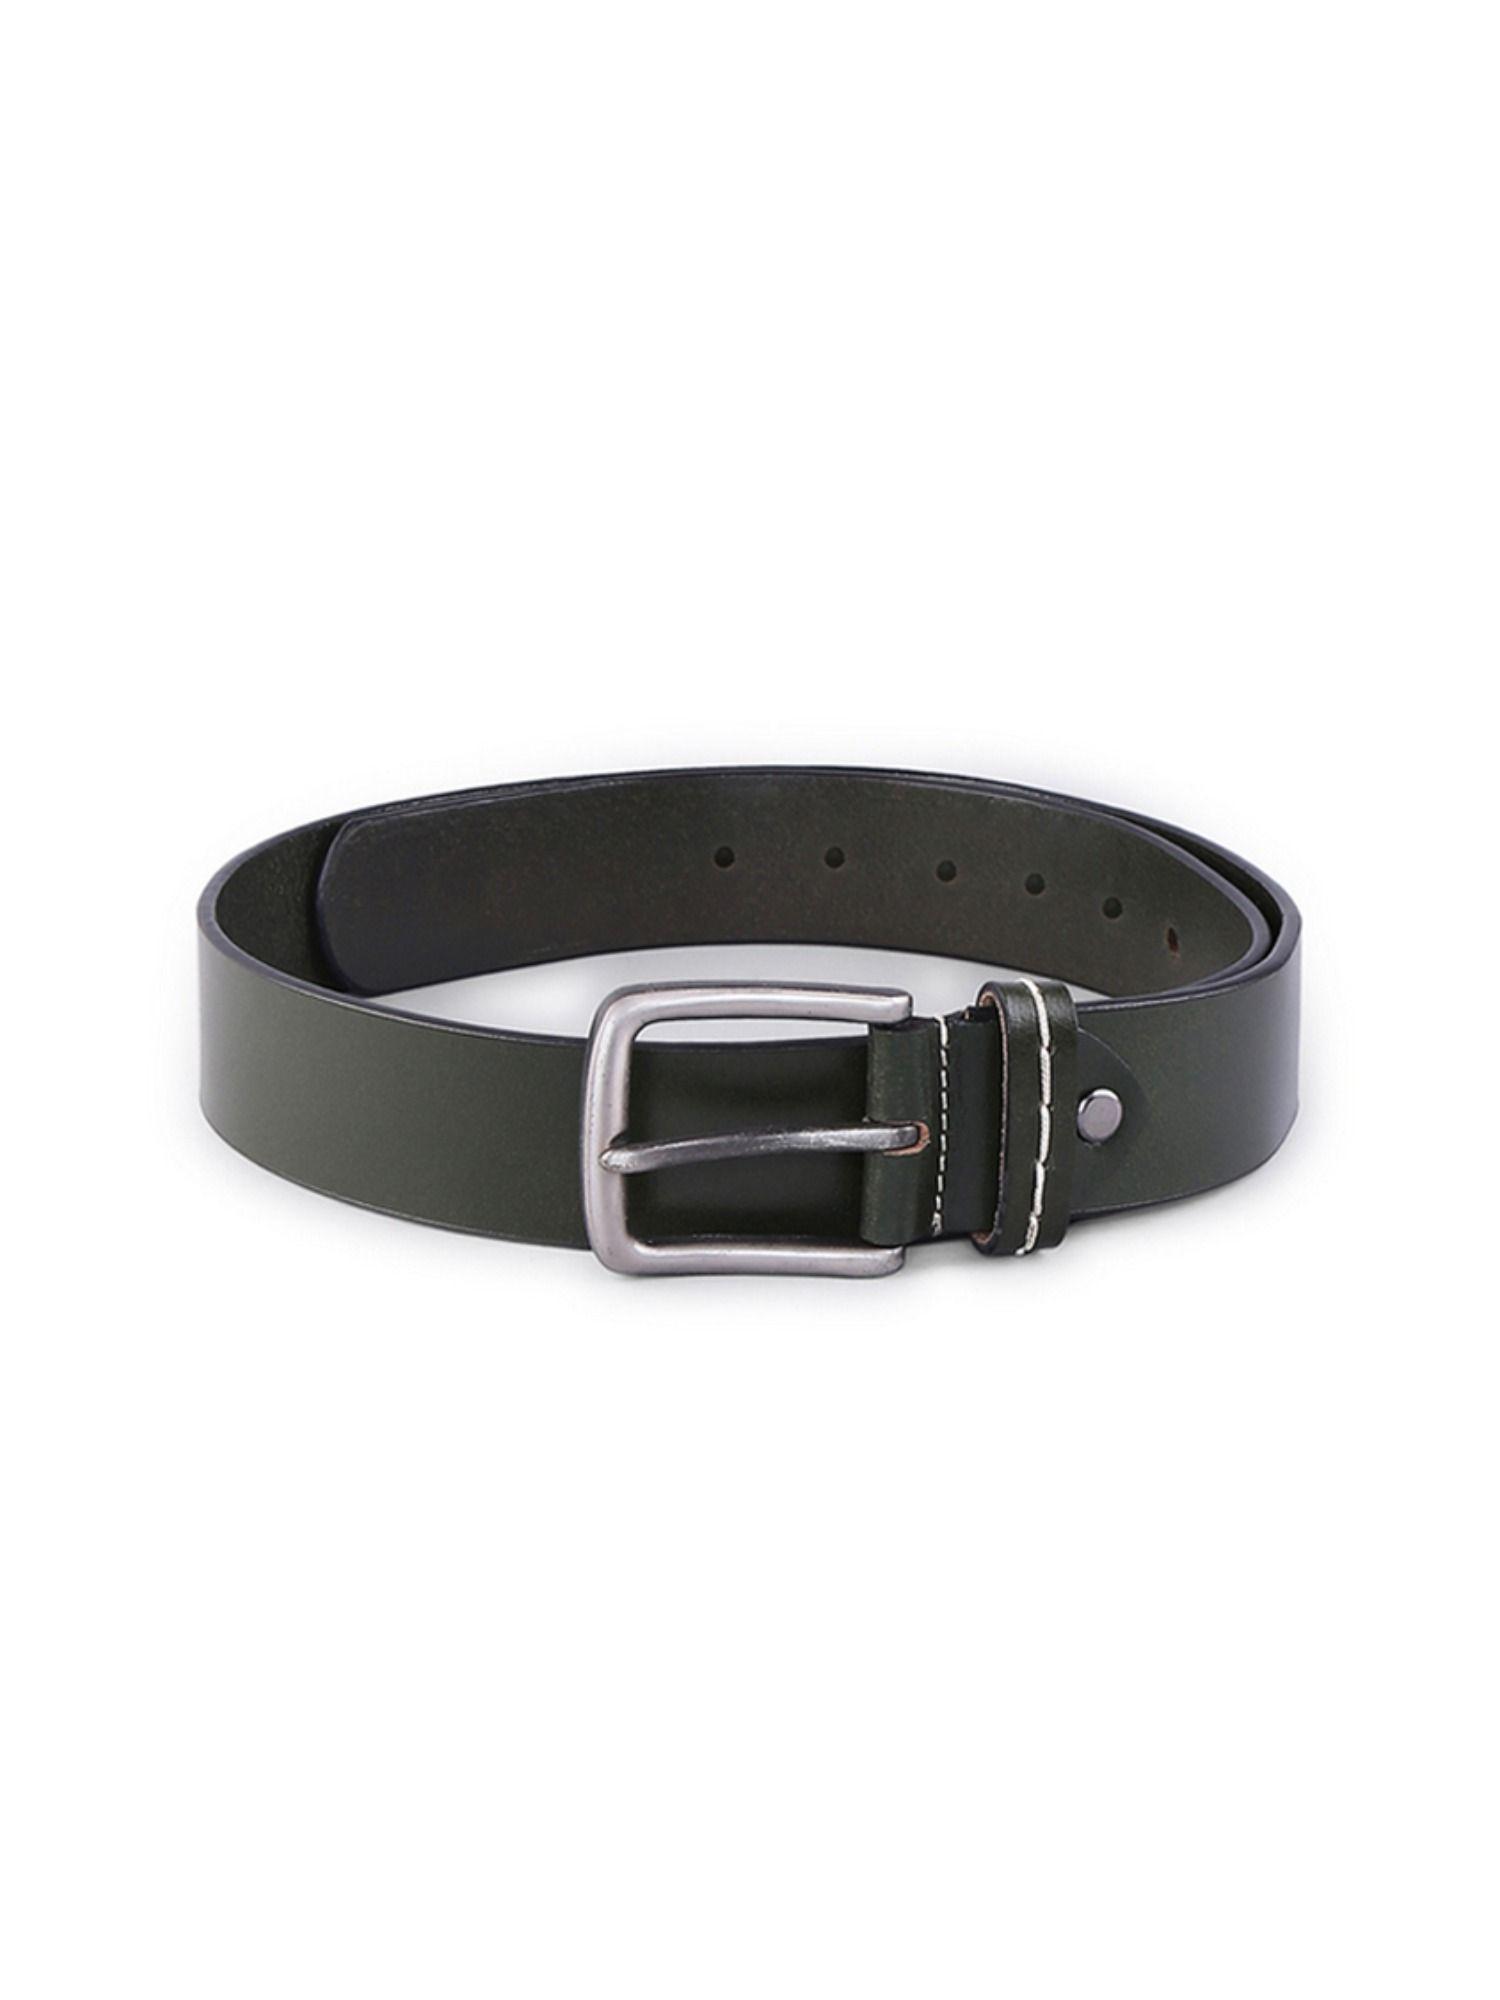 green-genuine-leather-belt